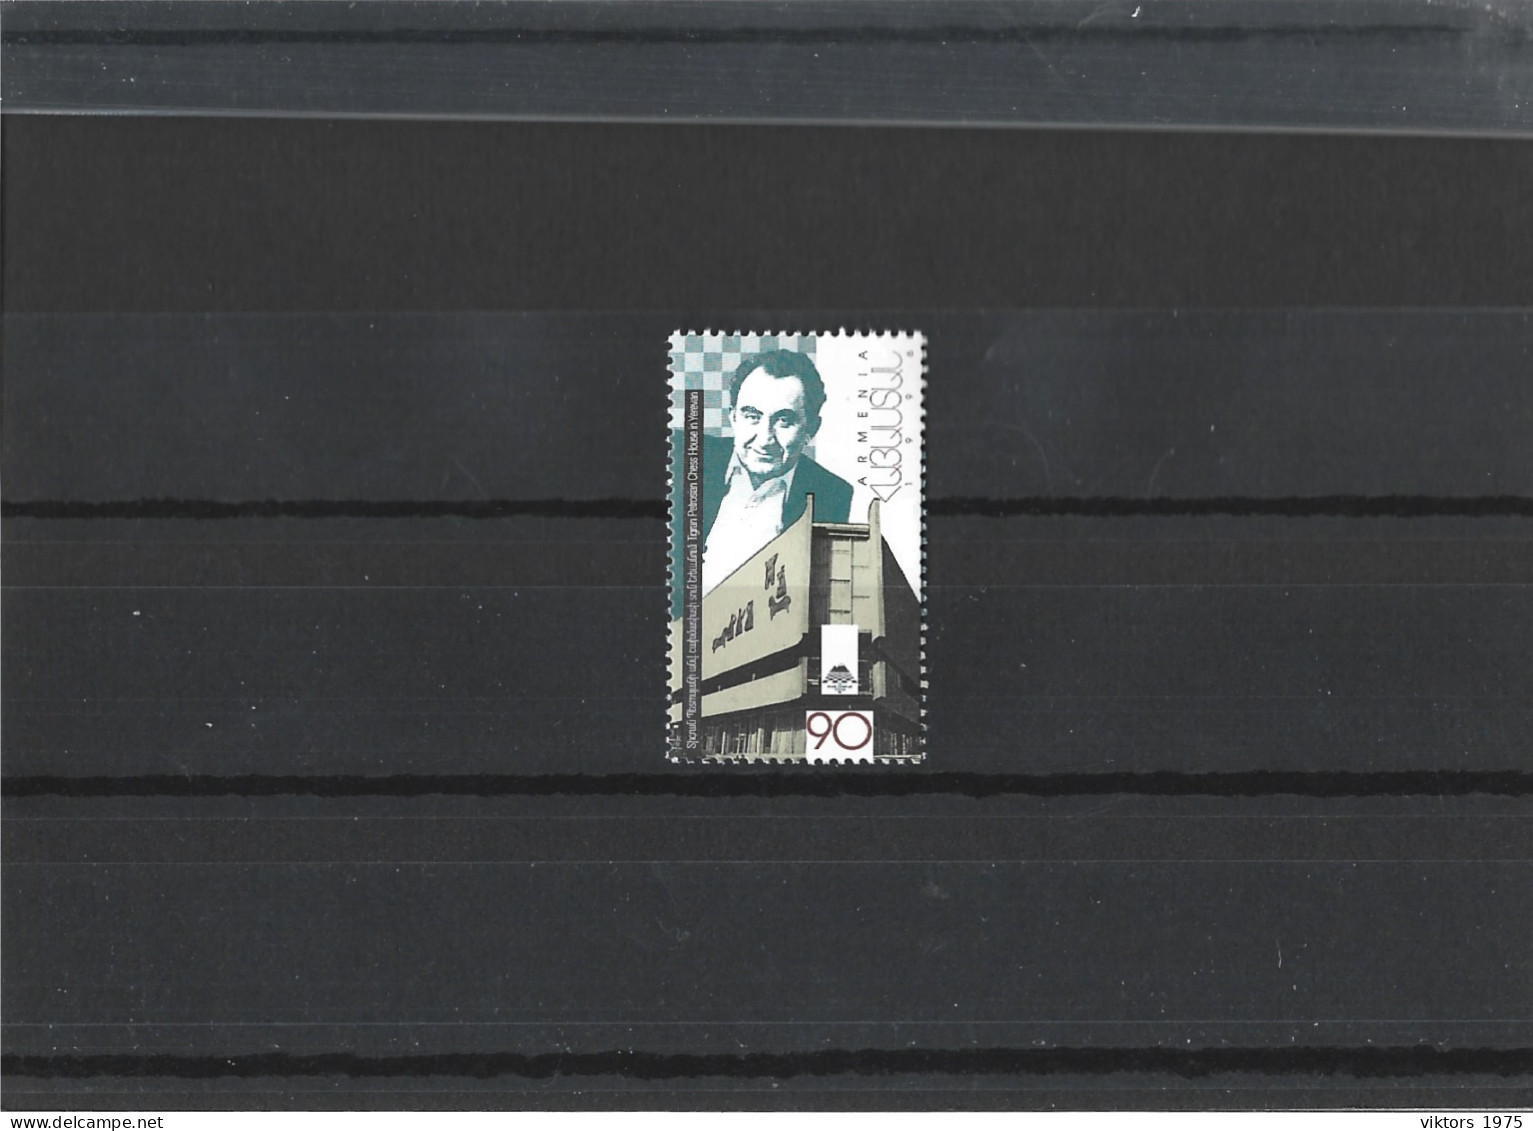 MNH Stamp Nr.297 Im MICHEL Catalog - Armenia